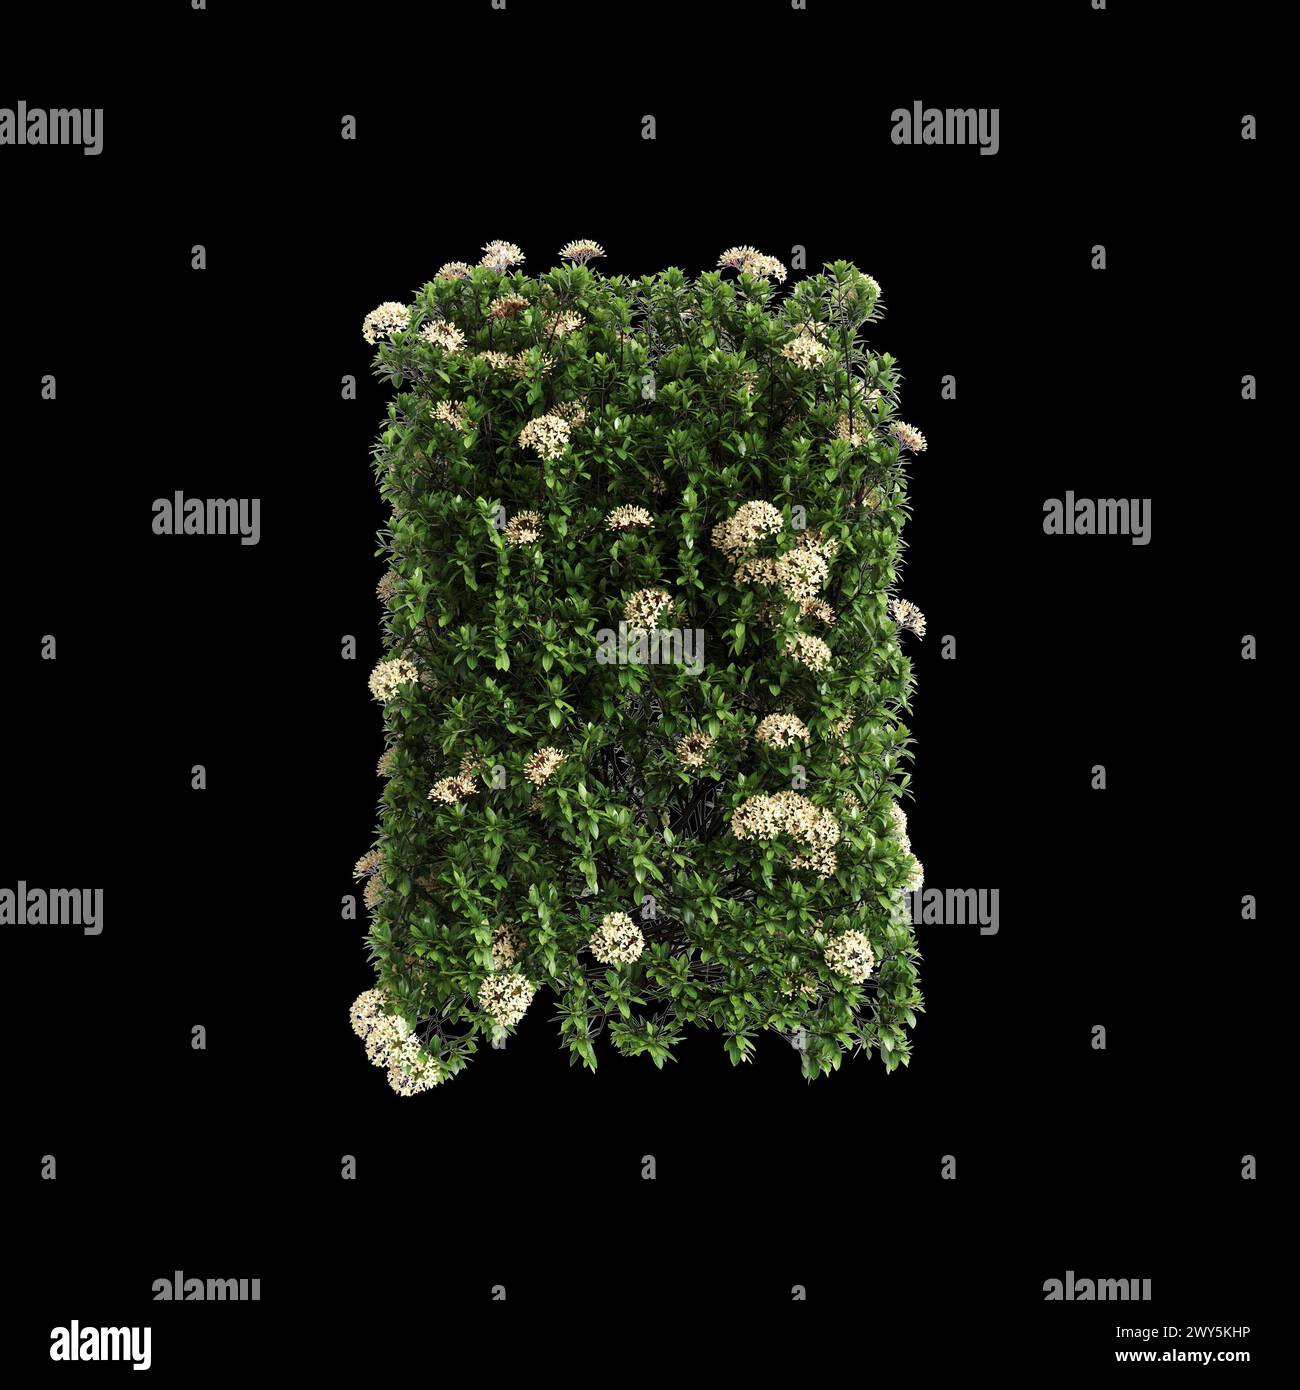 3d illustration of Ixora taiwanensis bush isolated on black background Stock Photo